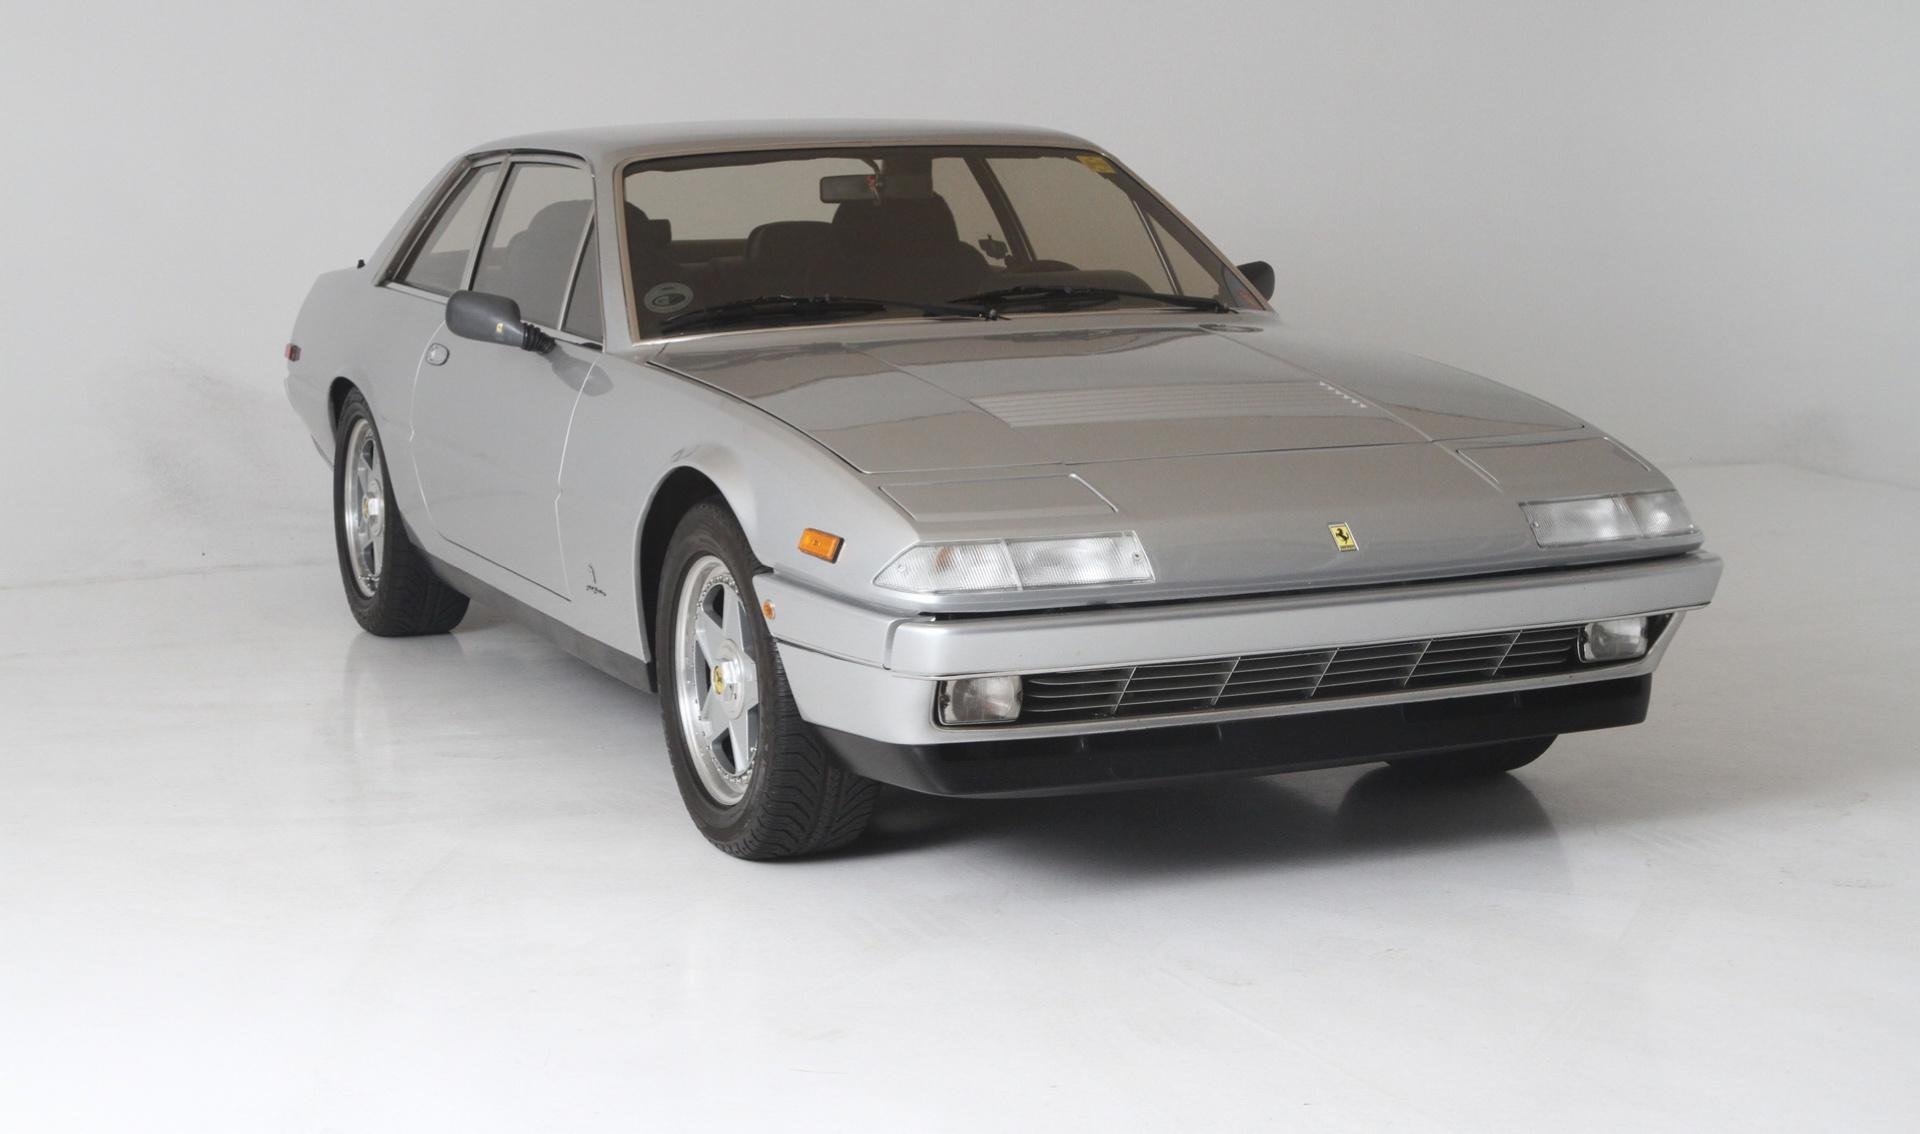 1986, Ferrari, 412, Gt, Agrento, Metallic, Silver, Cars Wallpaper